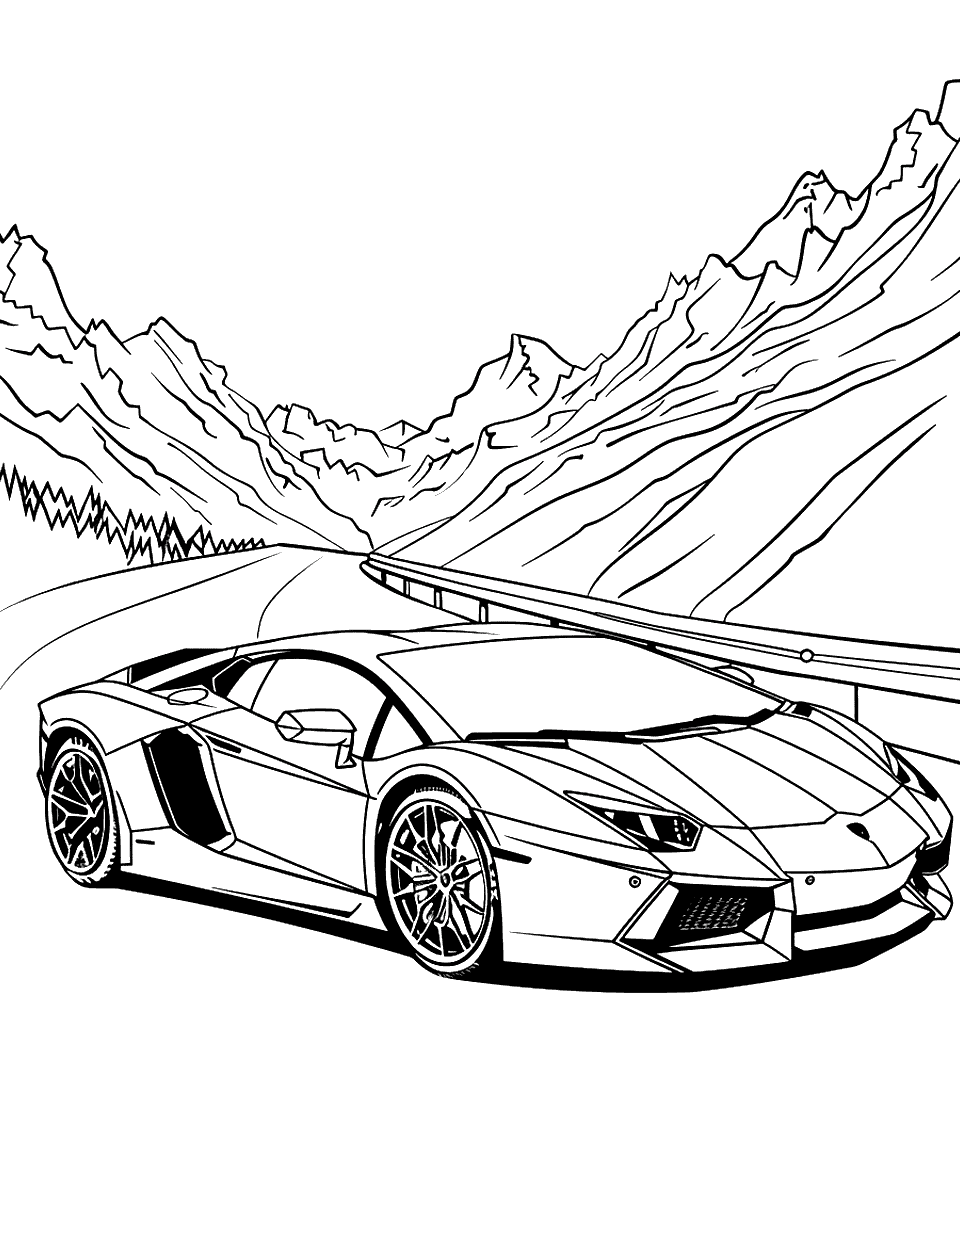 Lambo on a Mountain Road Lamborghini Coloring Page - A Lamborghini driving on a mountain road.